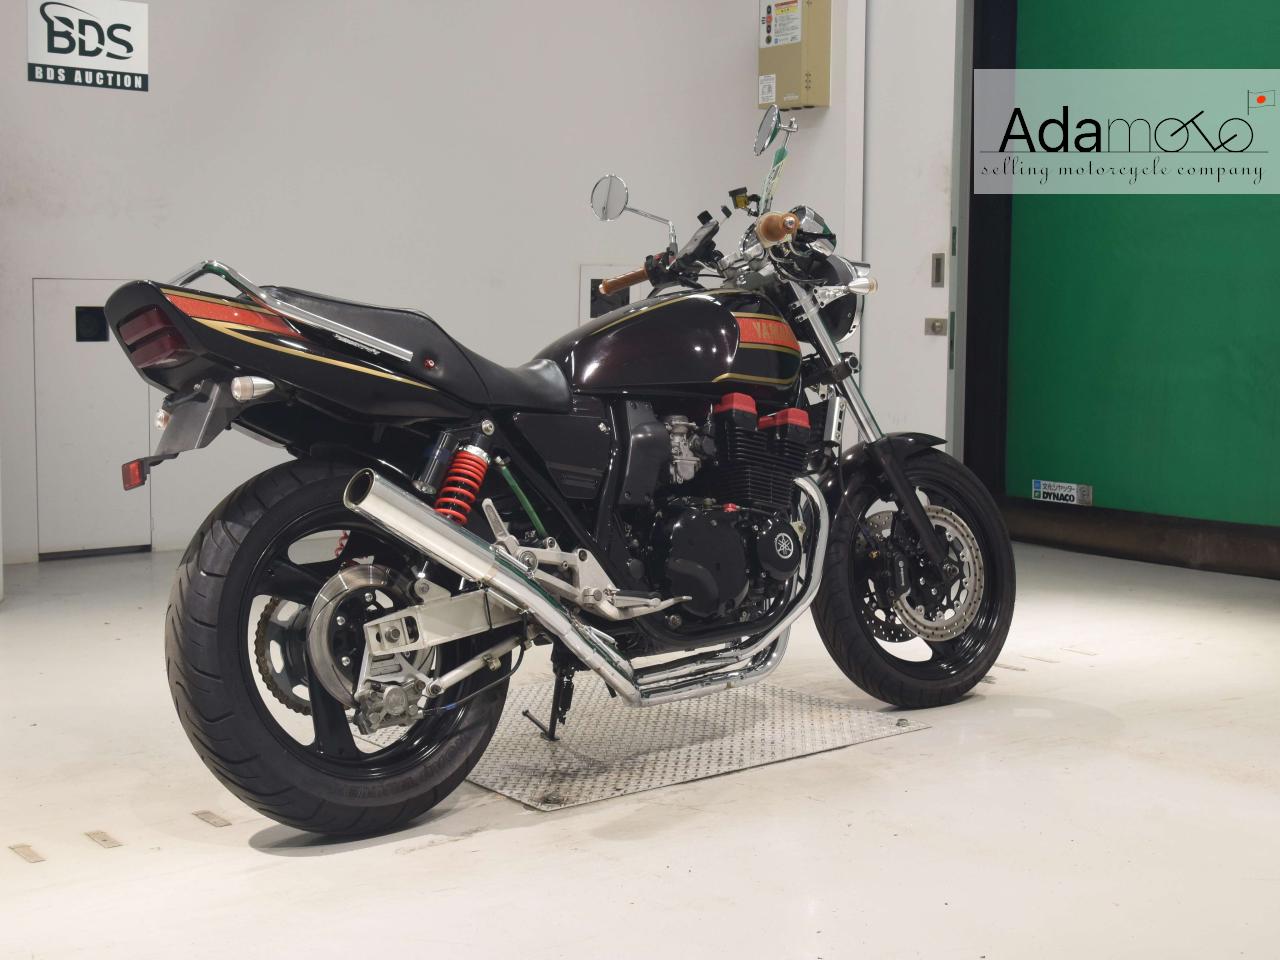 Yamaha XJR400 - Adamoto - Motorcycles from Japan